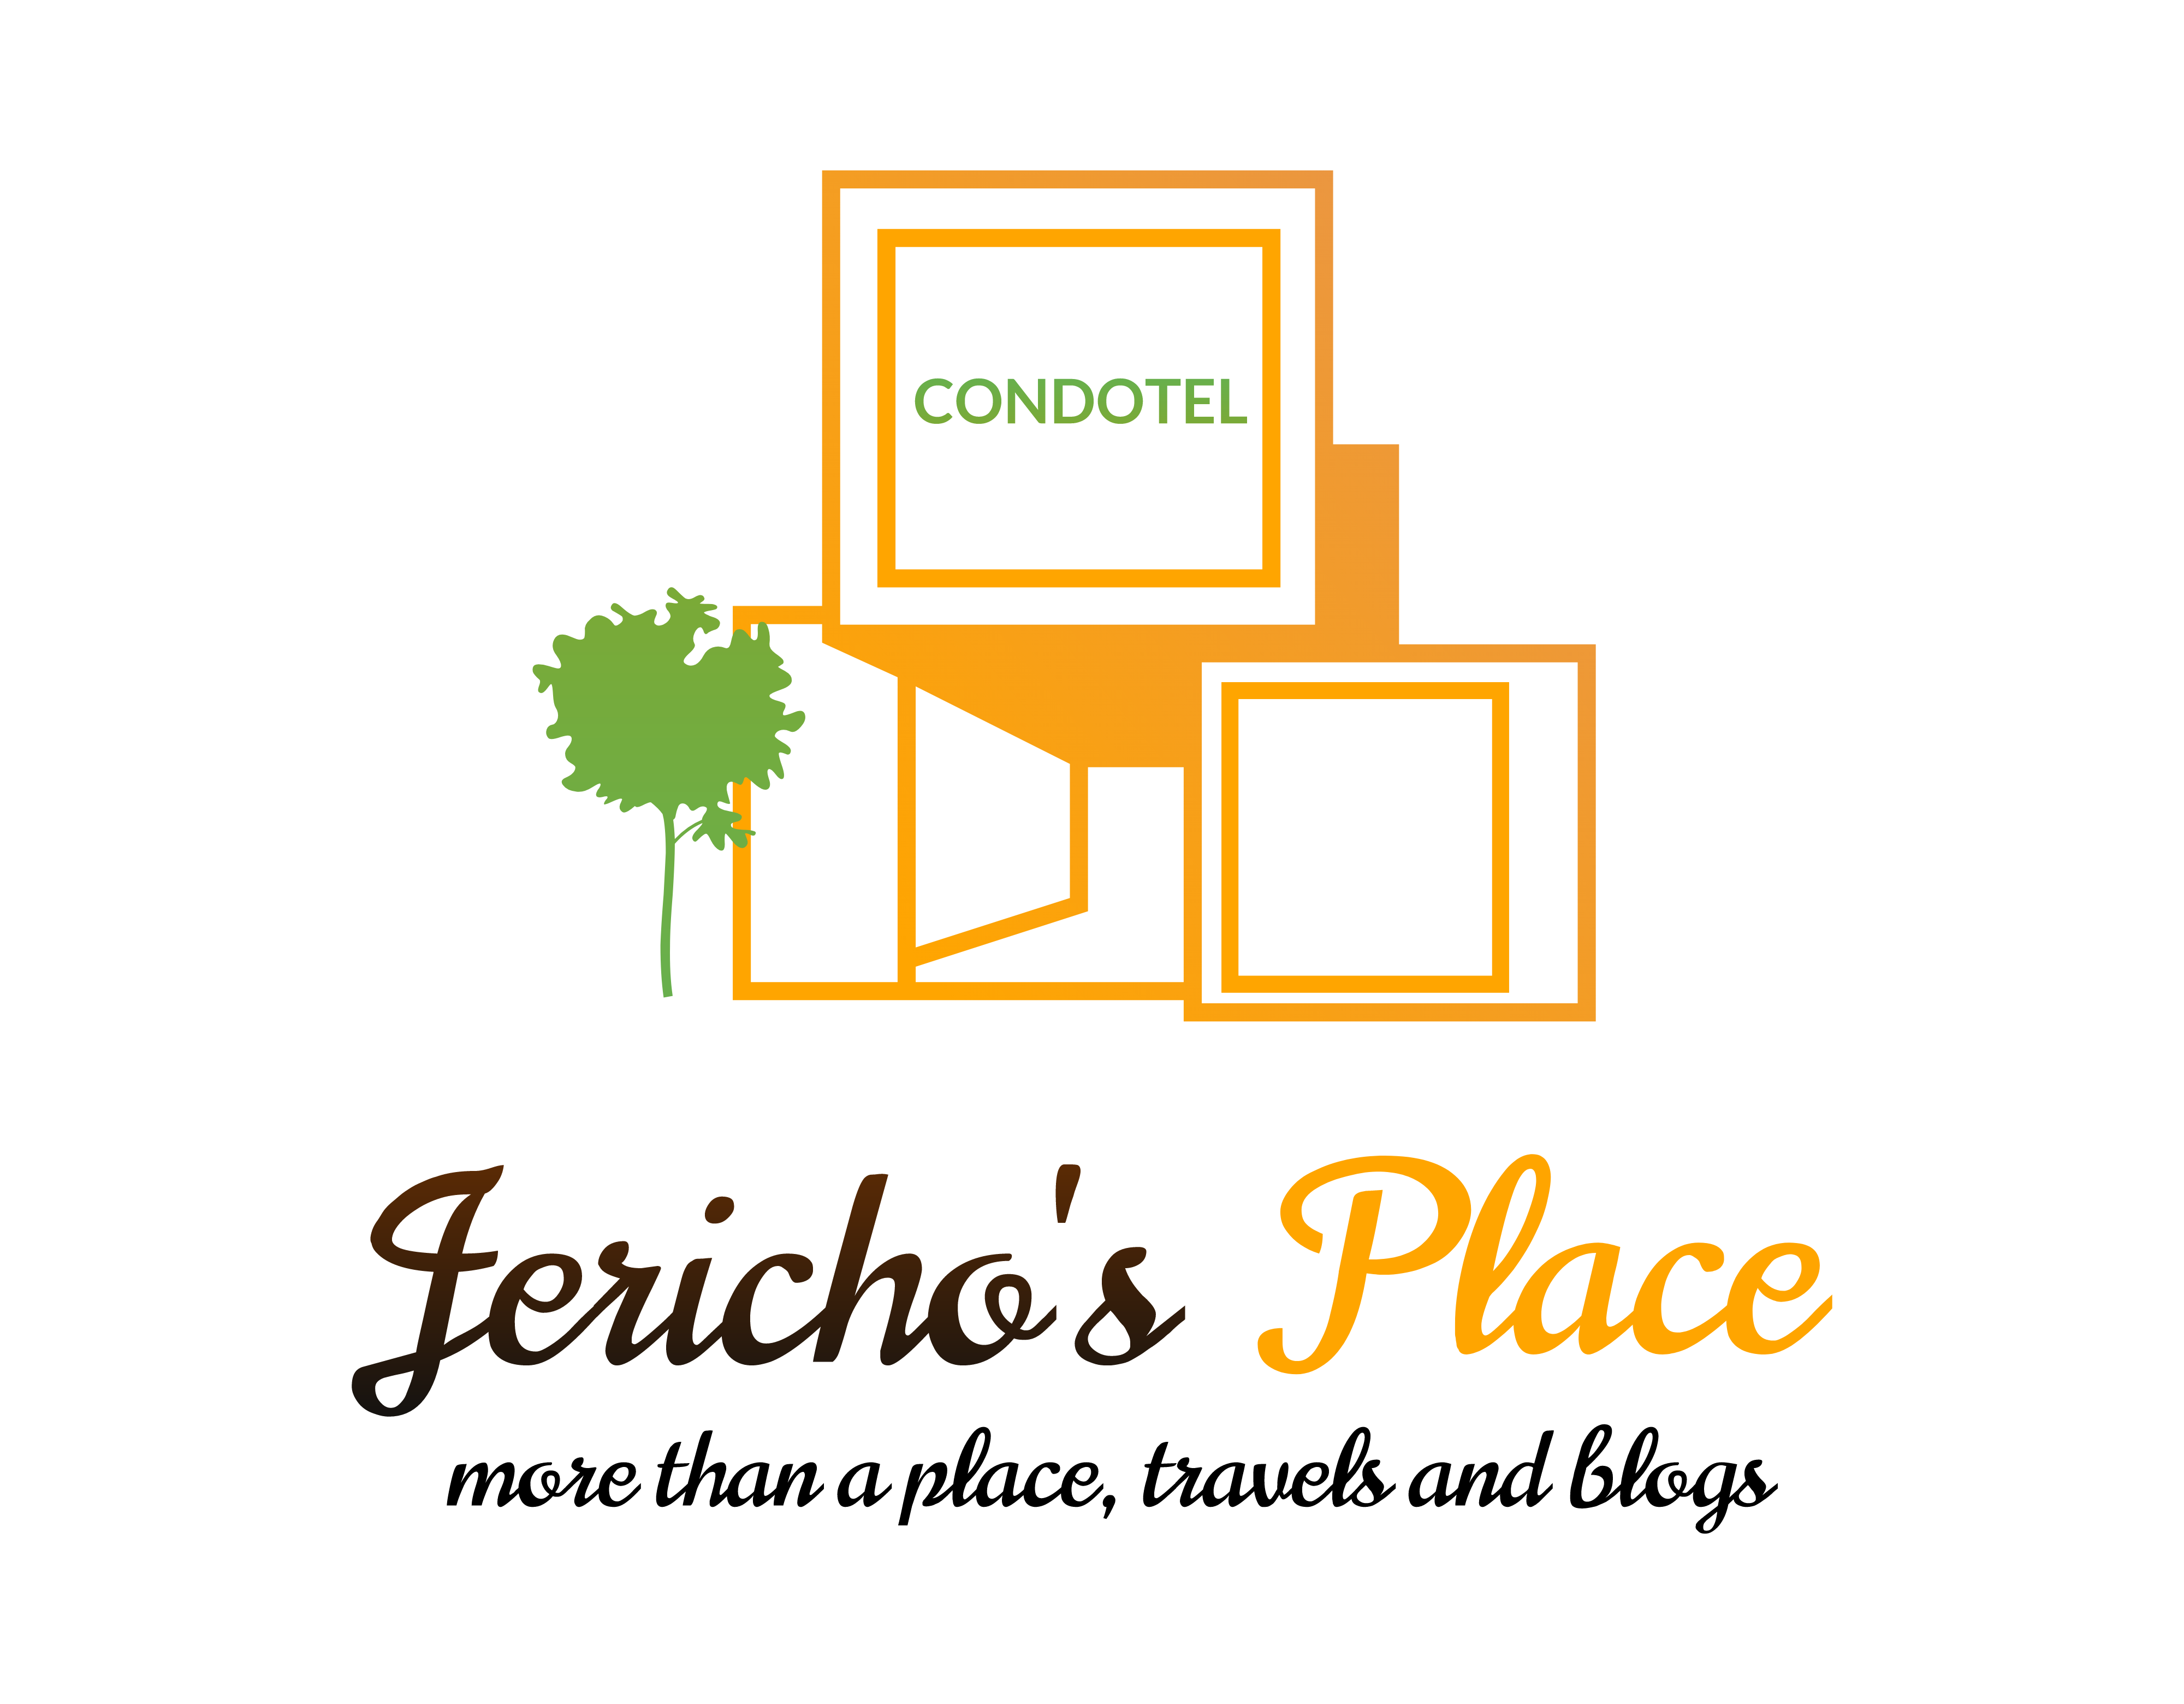 Jericho's Place Condotel